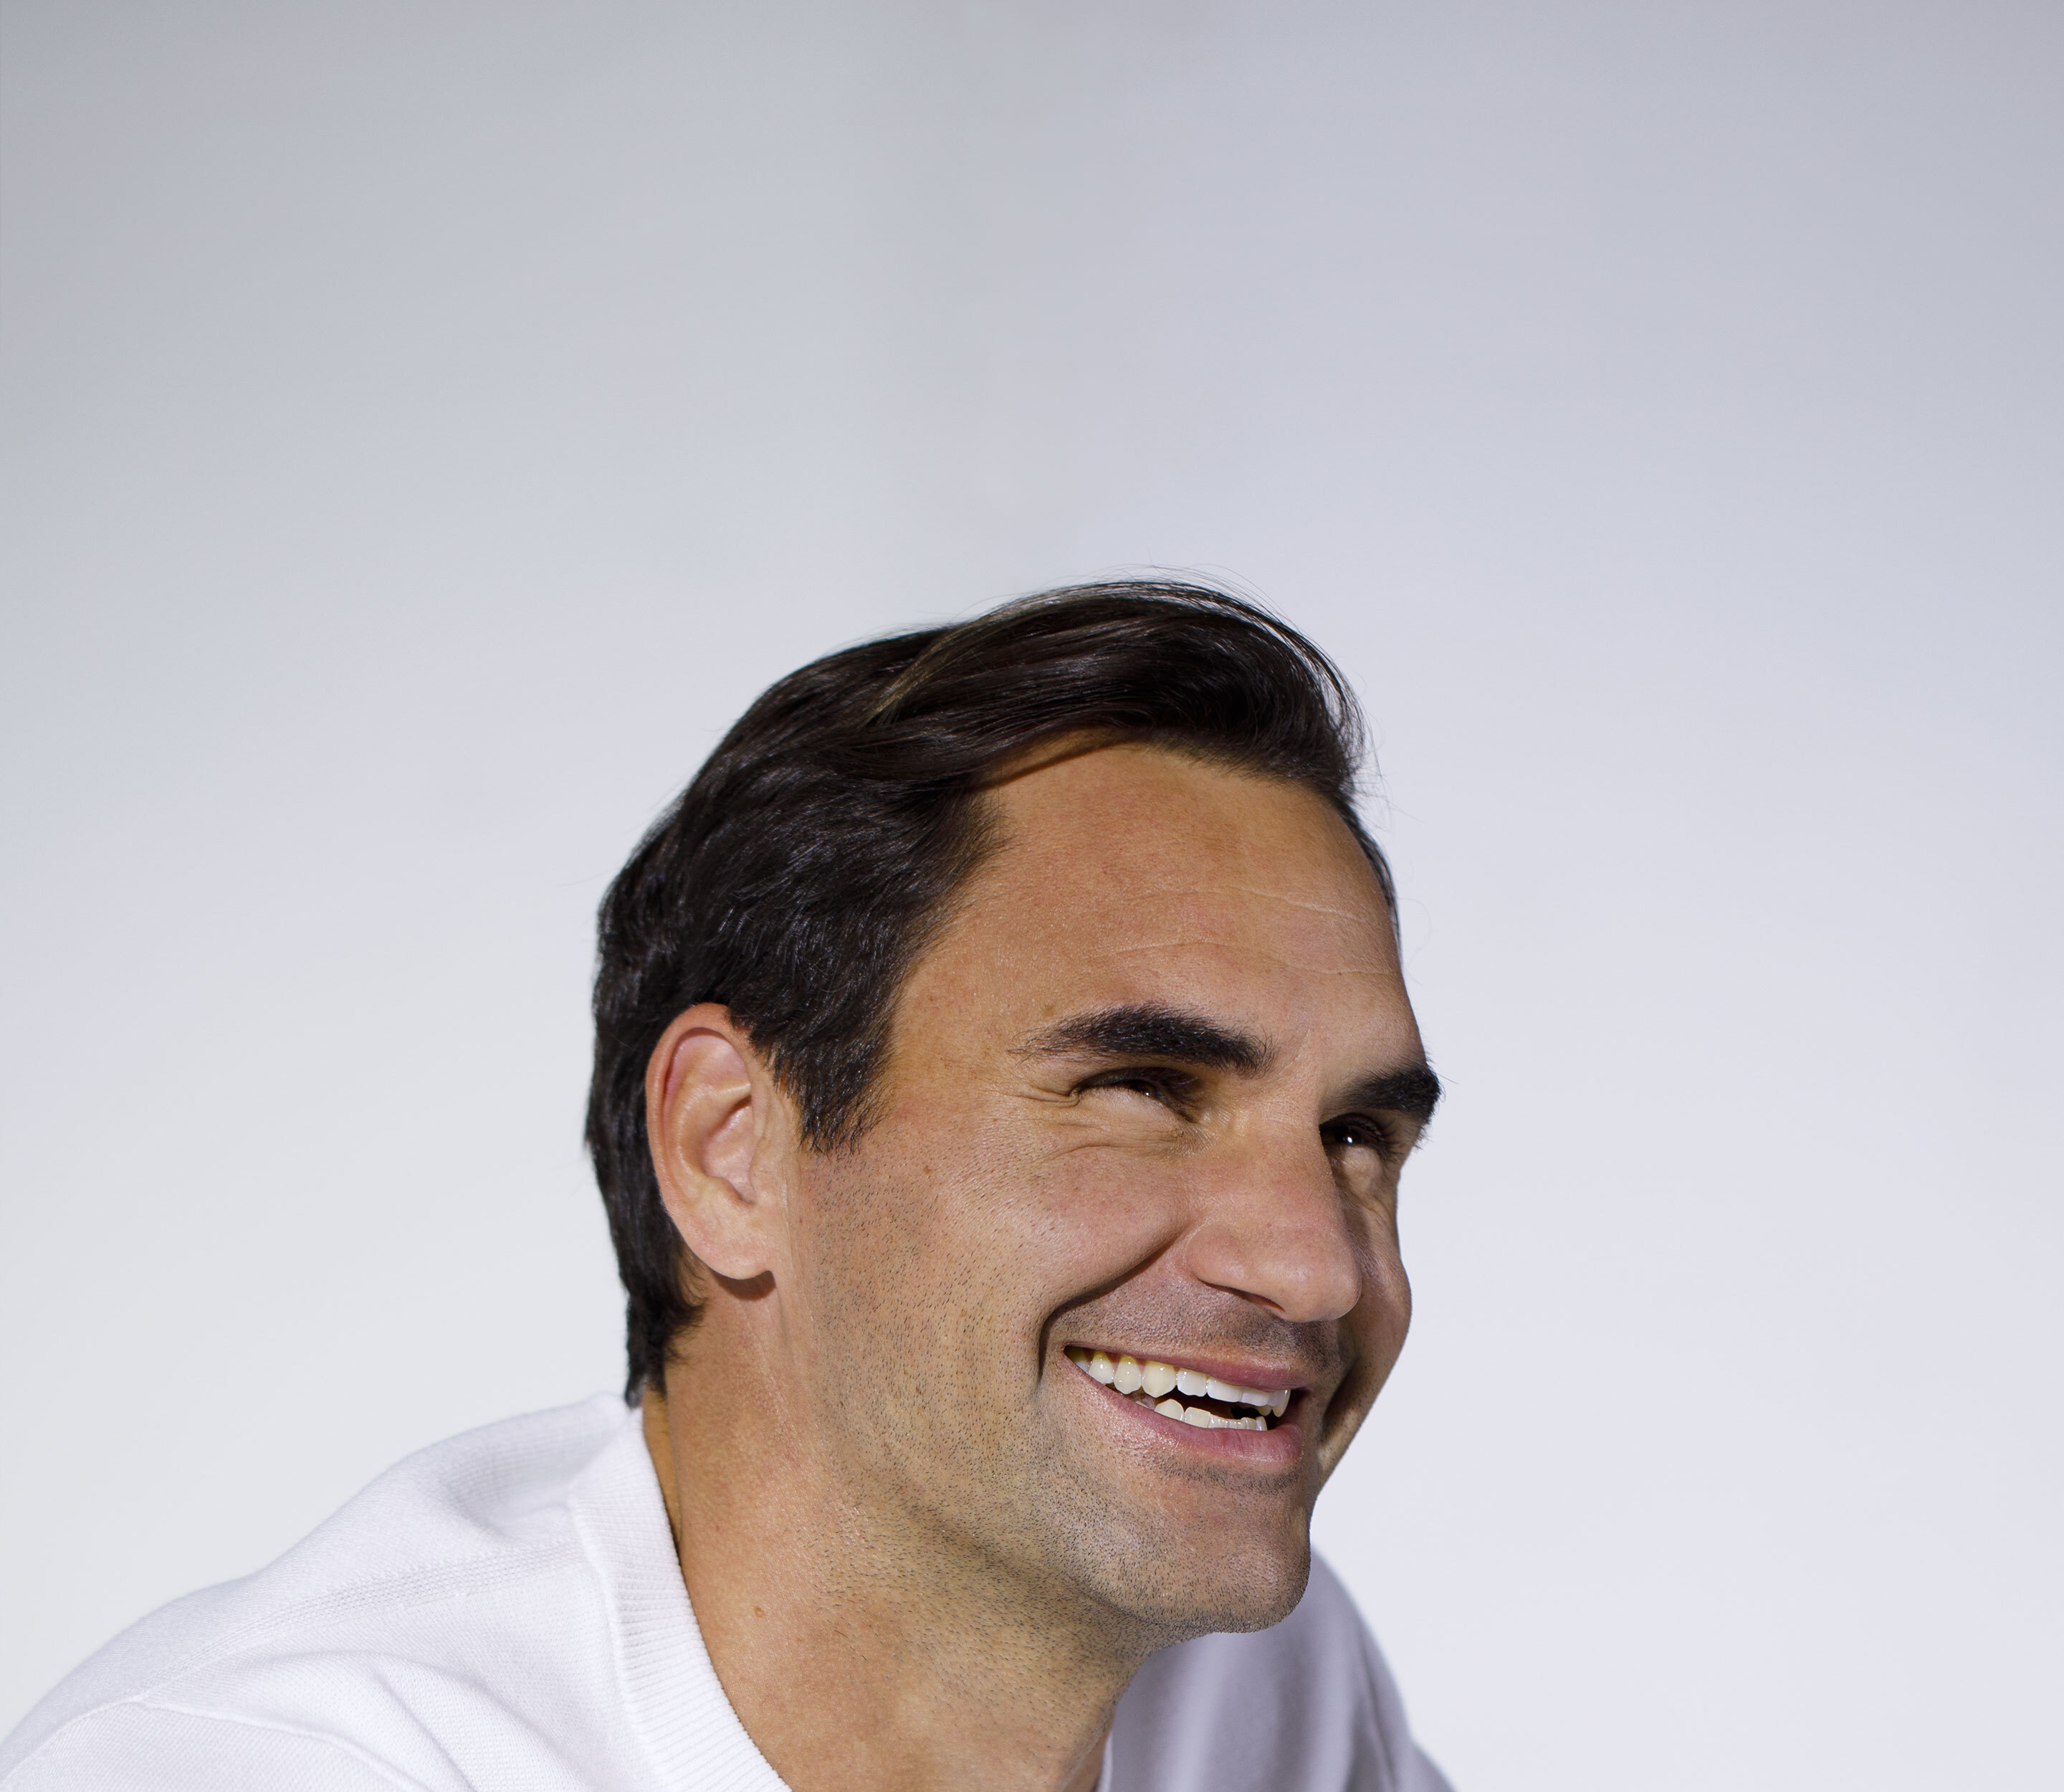 Roger Federer, Zitat